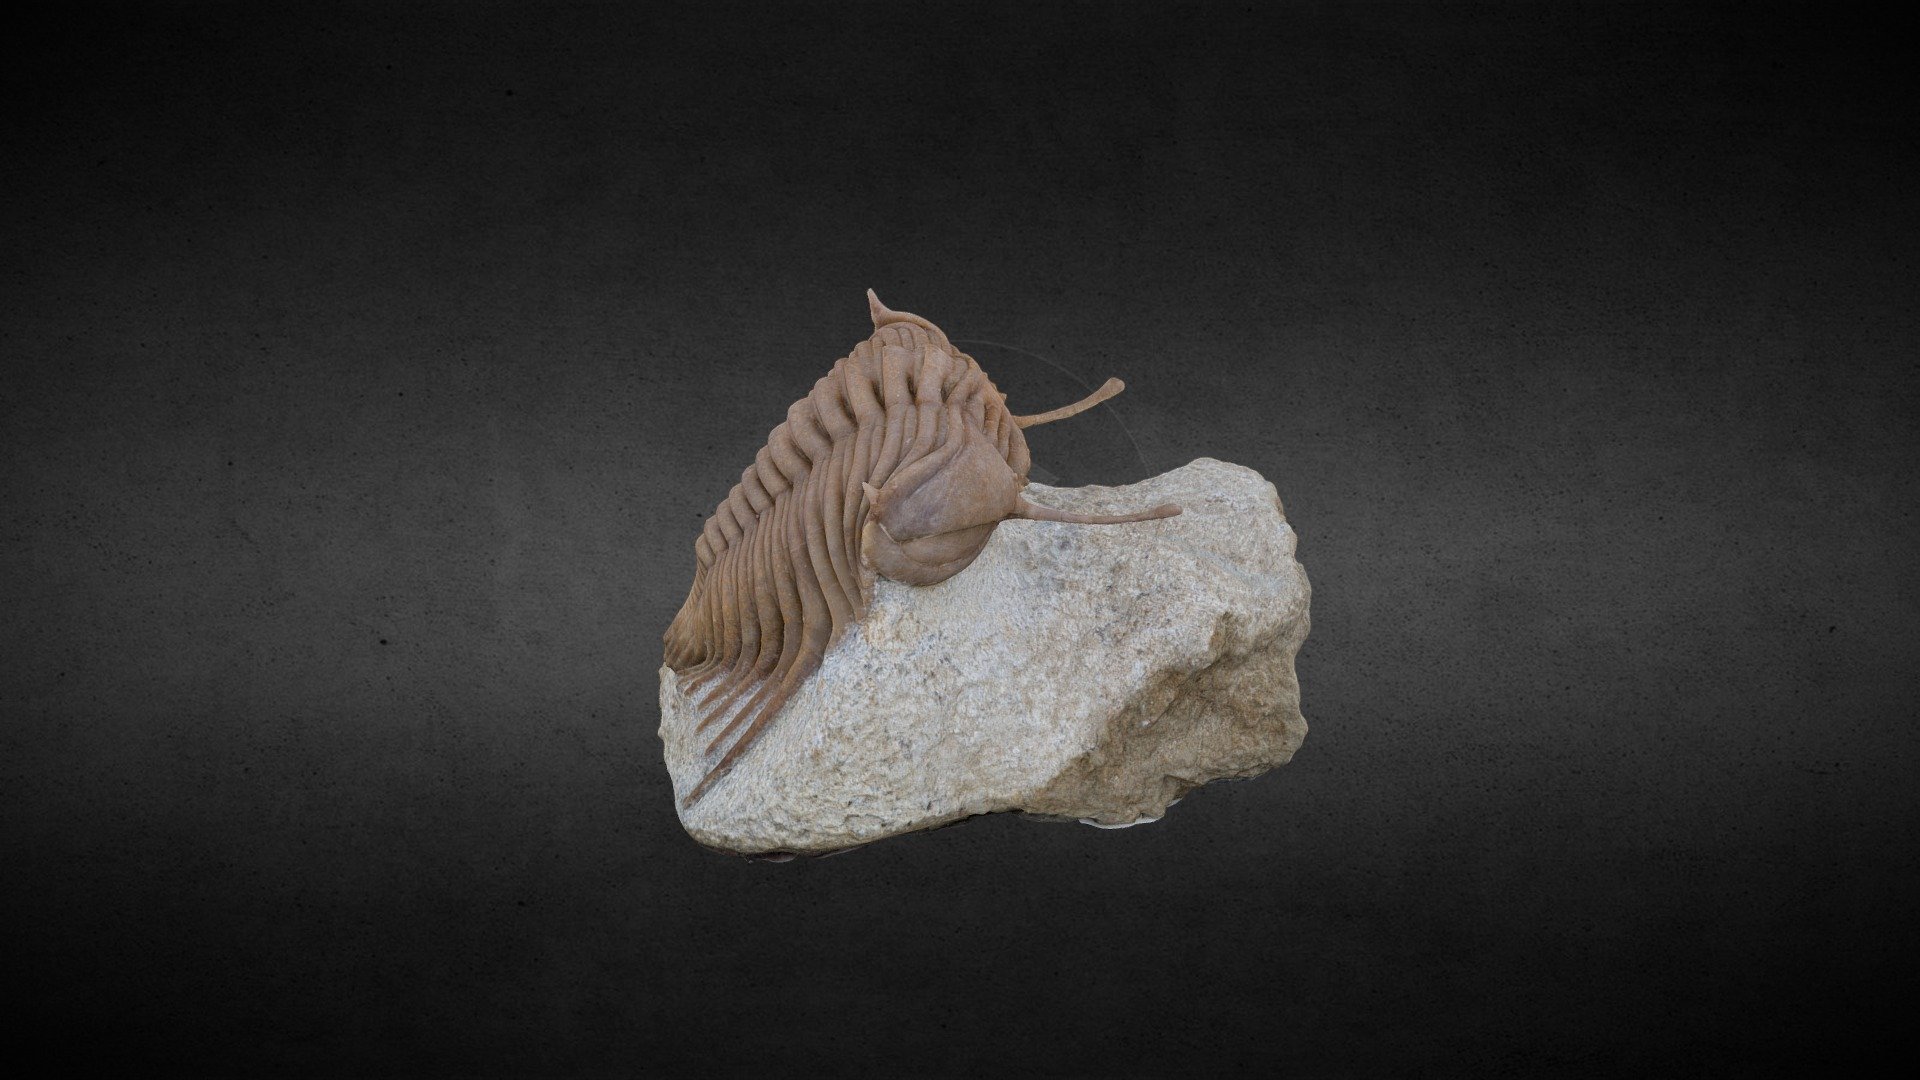 3D model of fossil created using macro photogrammetry
www.scanstudio.sk - Fossil - 3D model by SCANSTUDIO 3d model